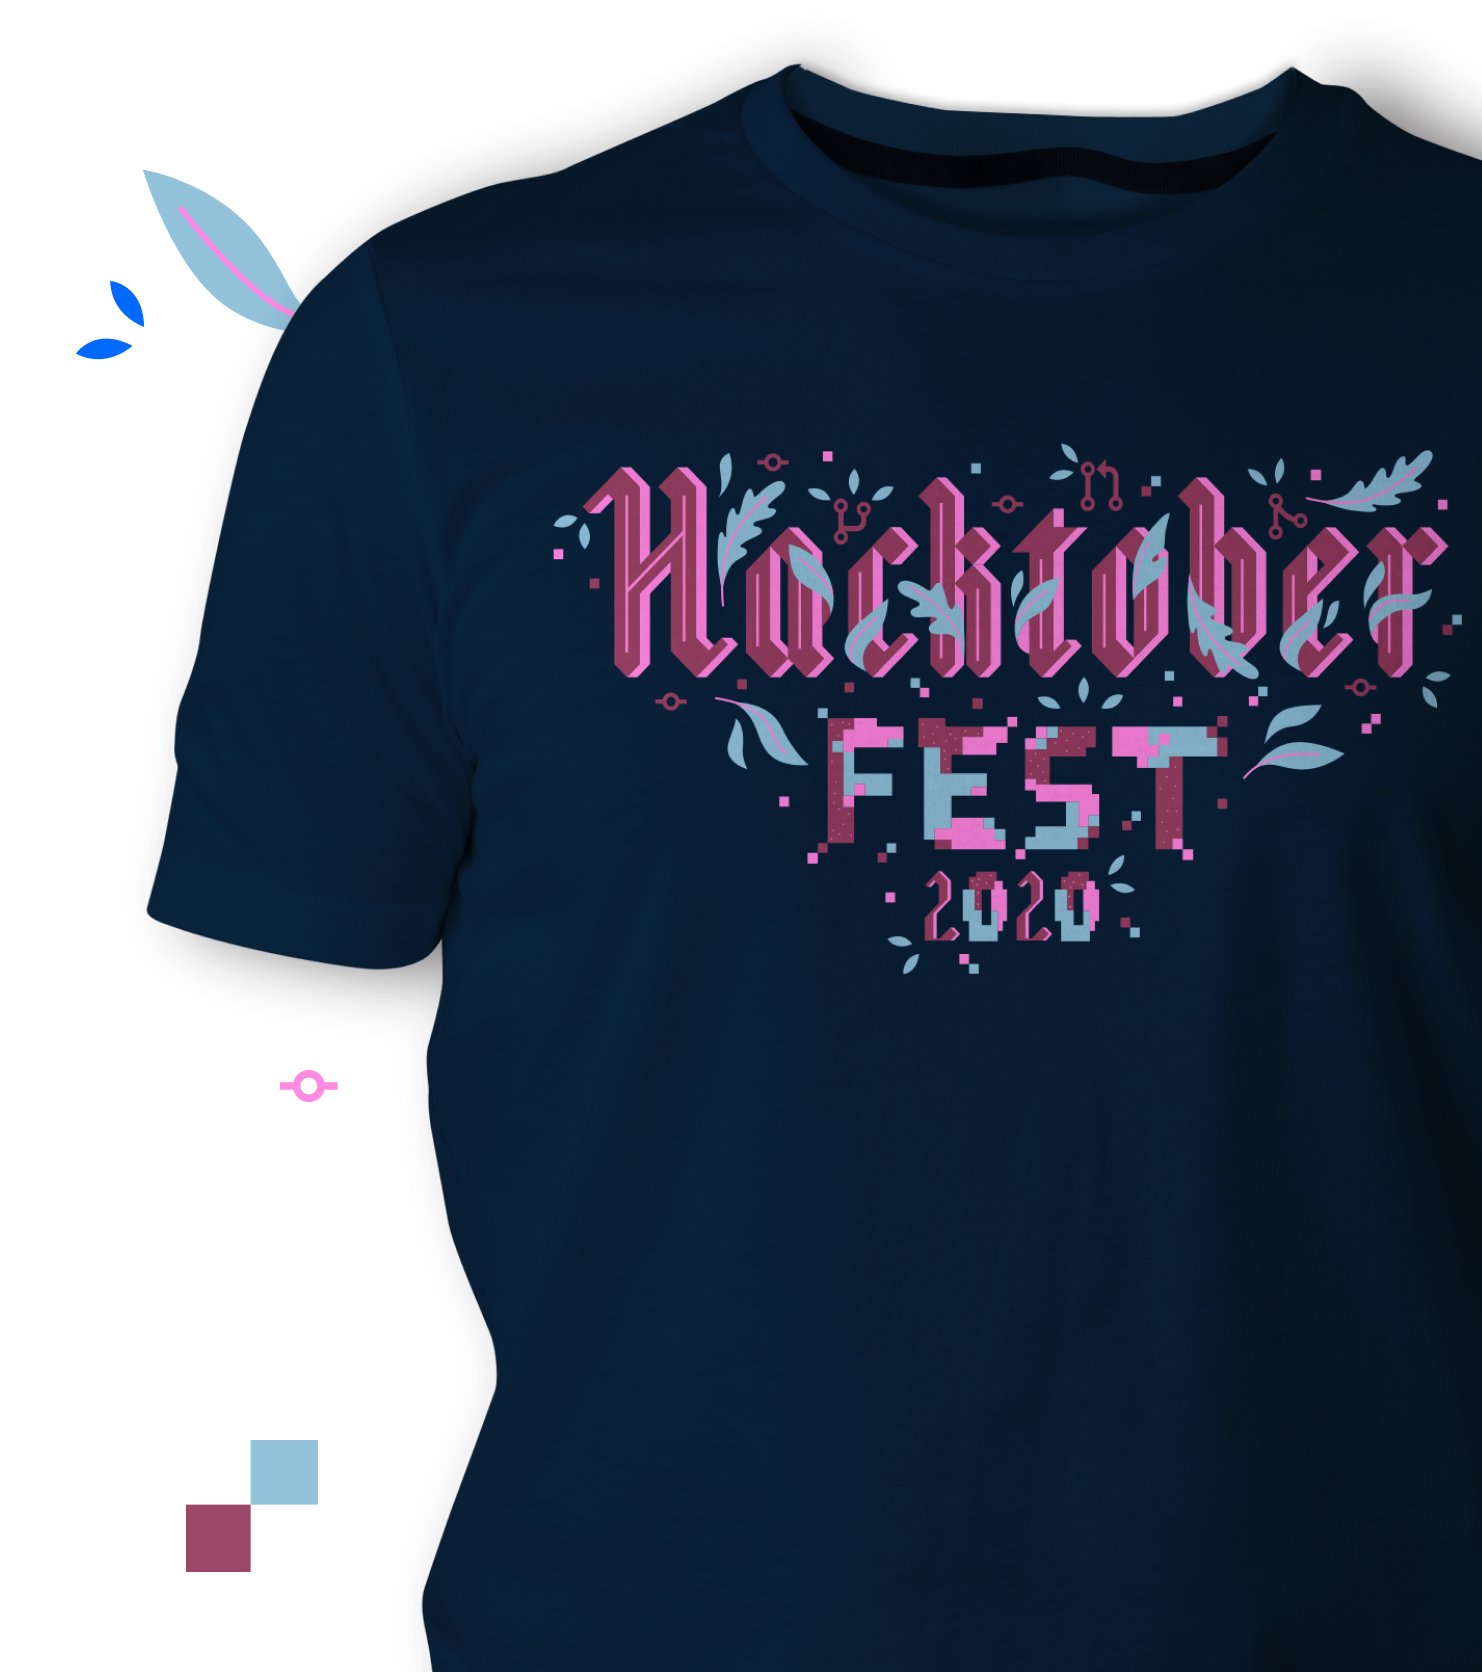 Camiseta Hacktoberfest - 2020